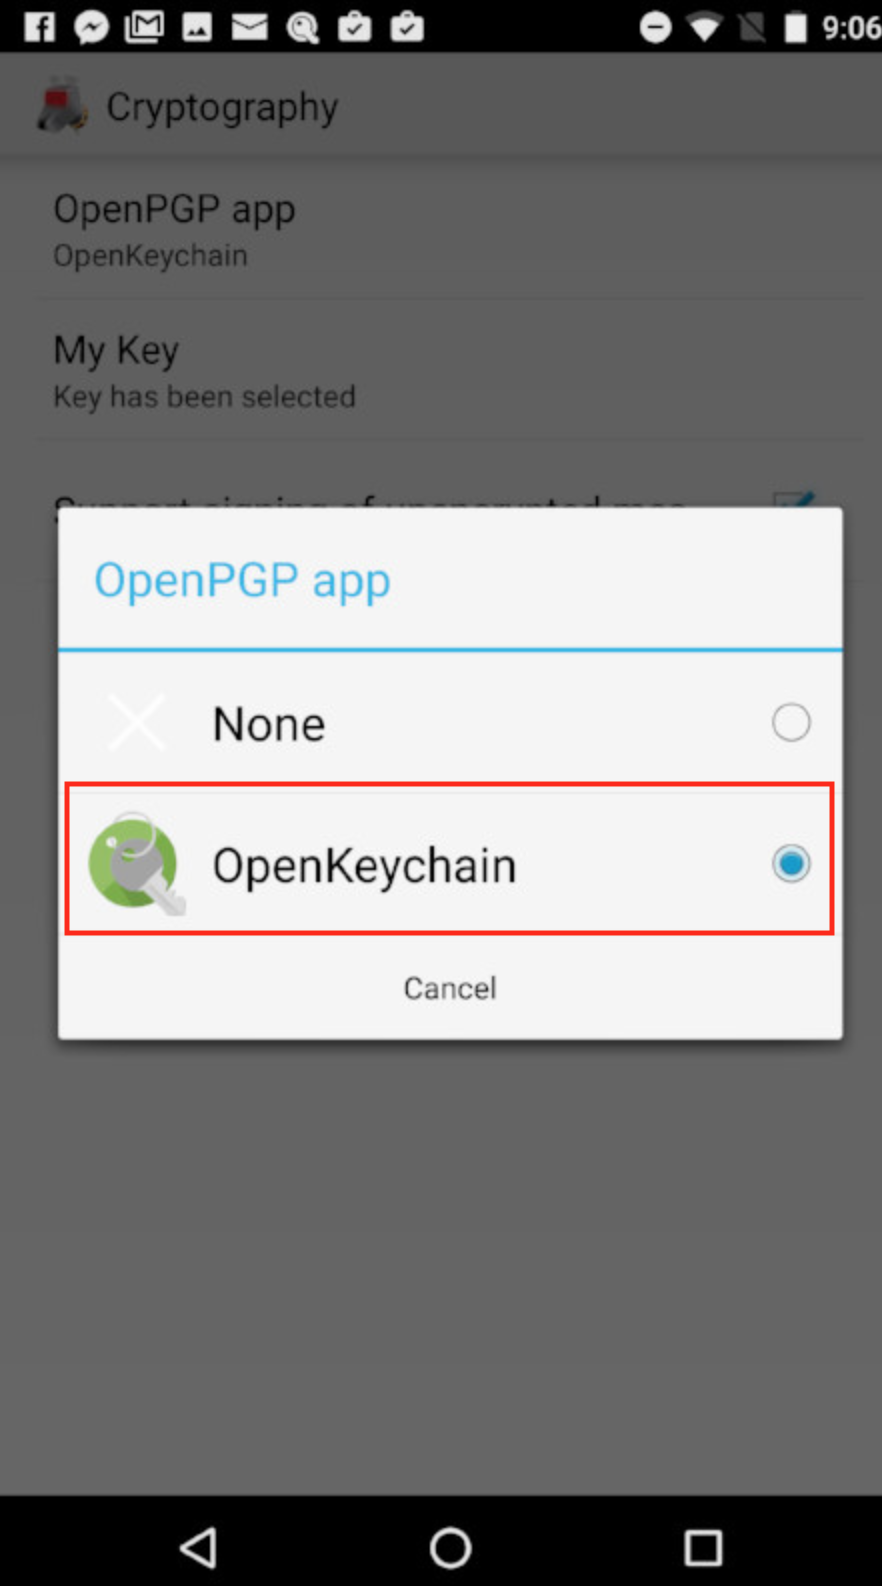 K-9 OpenKeychain